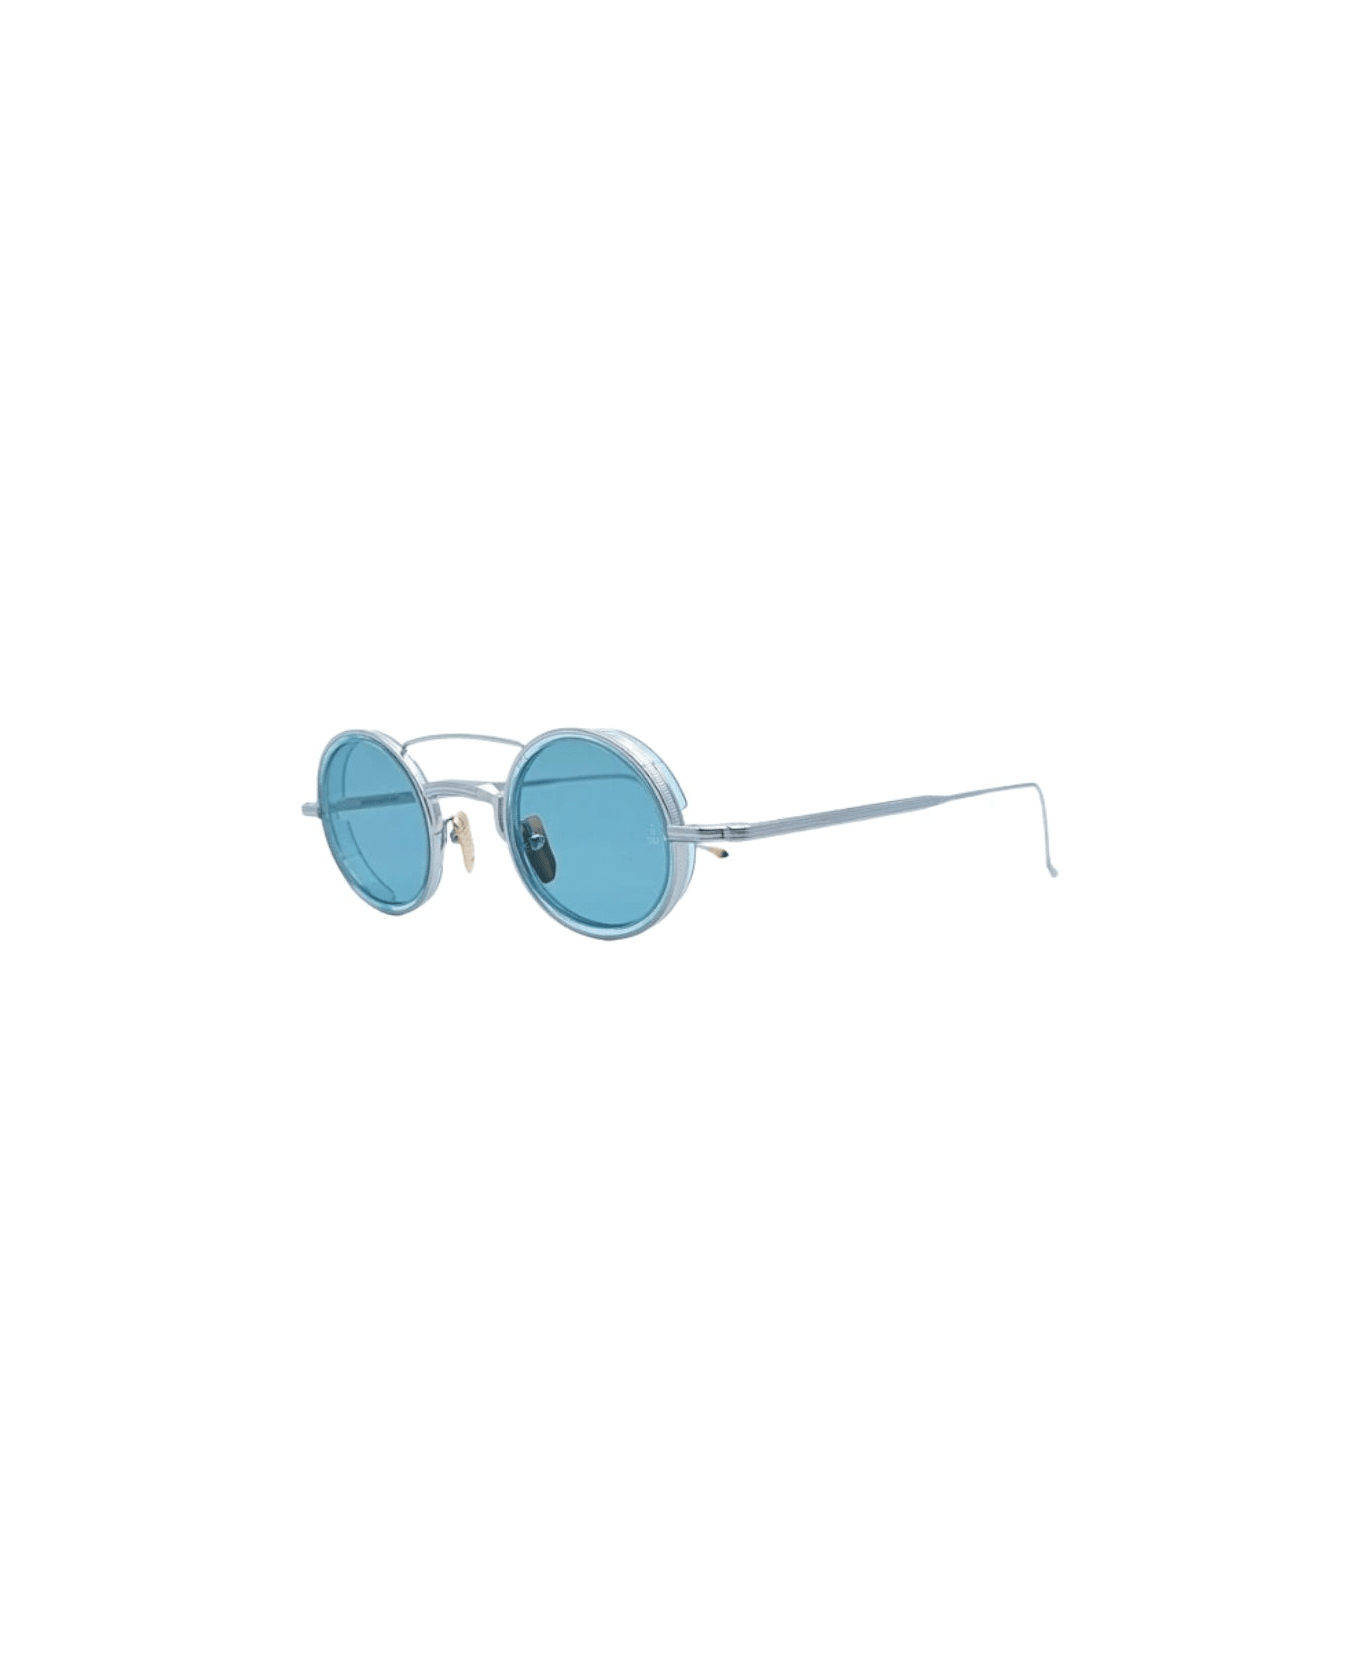 Jacques Marie Mage Ringo Sunglasses